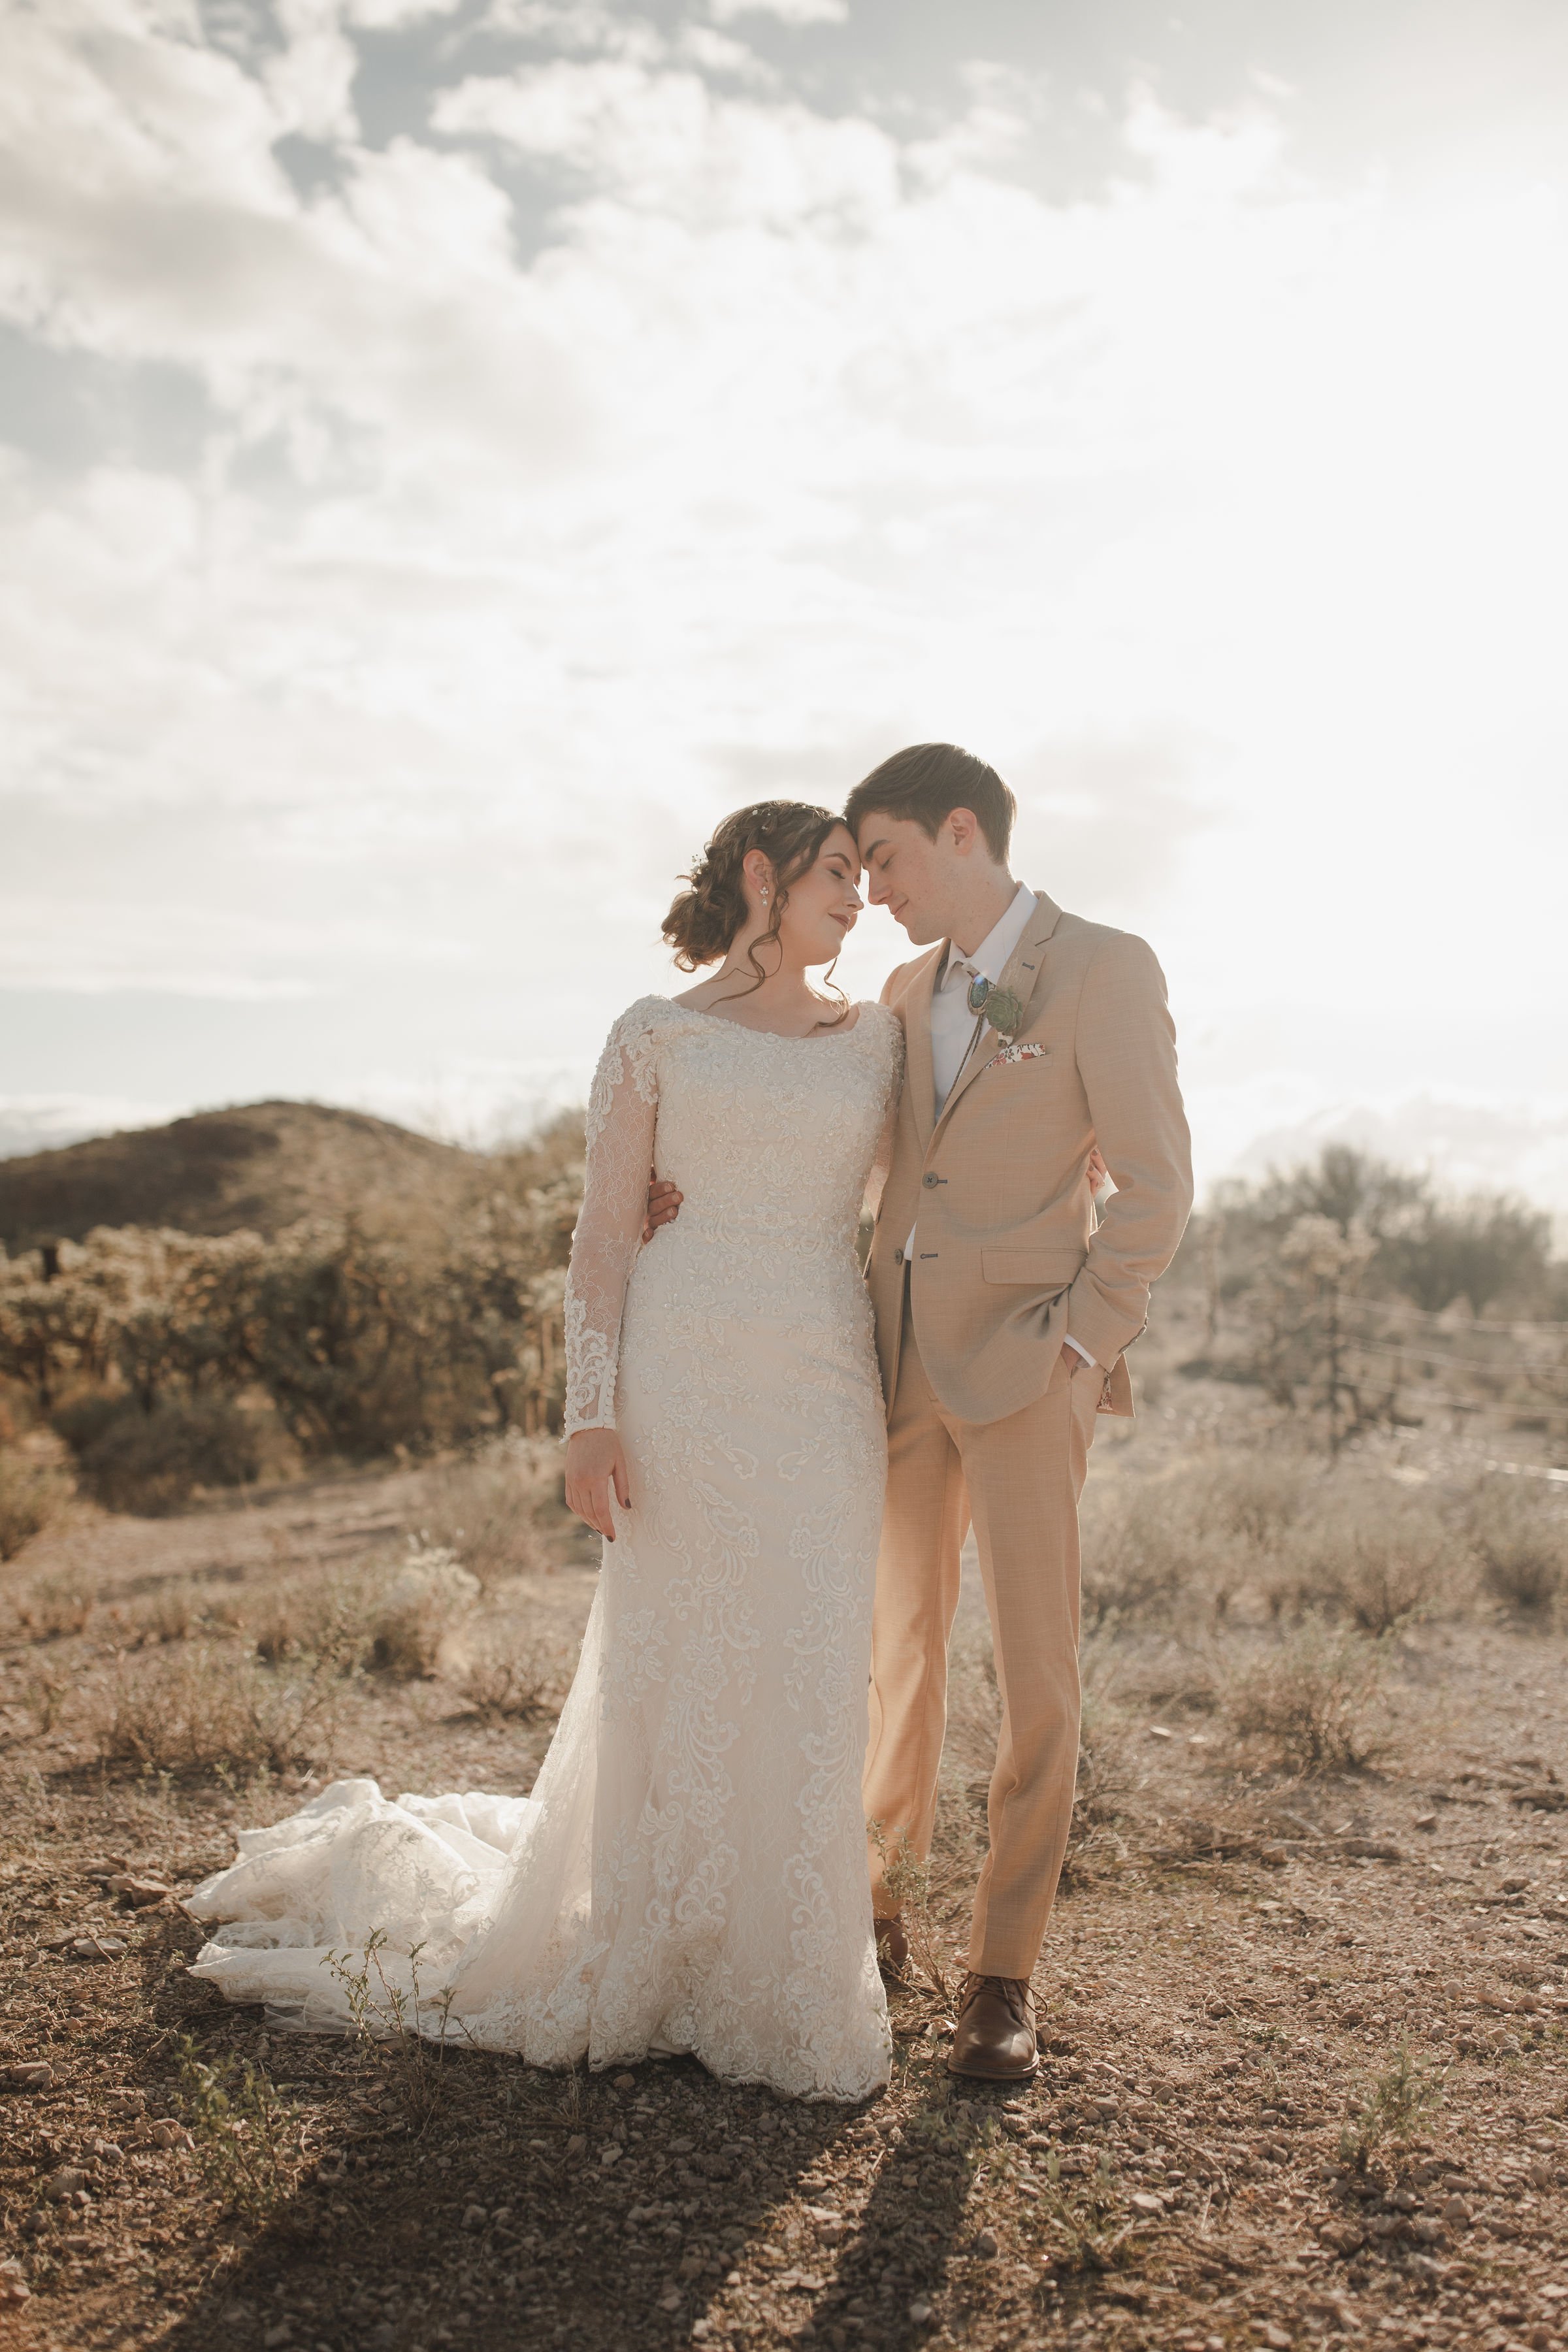 Intimate Desert Wedding at the Superstition Mountains | Arizona Wedding Photographer31.jpg